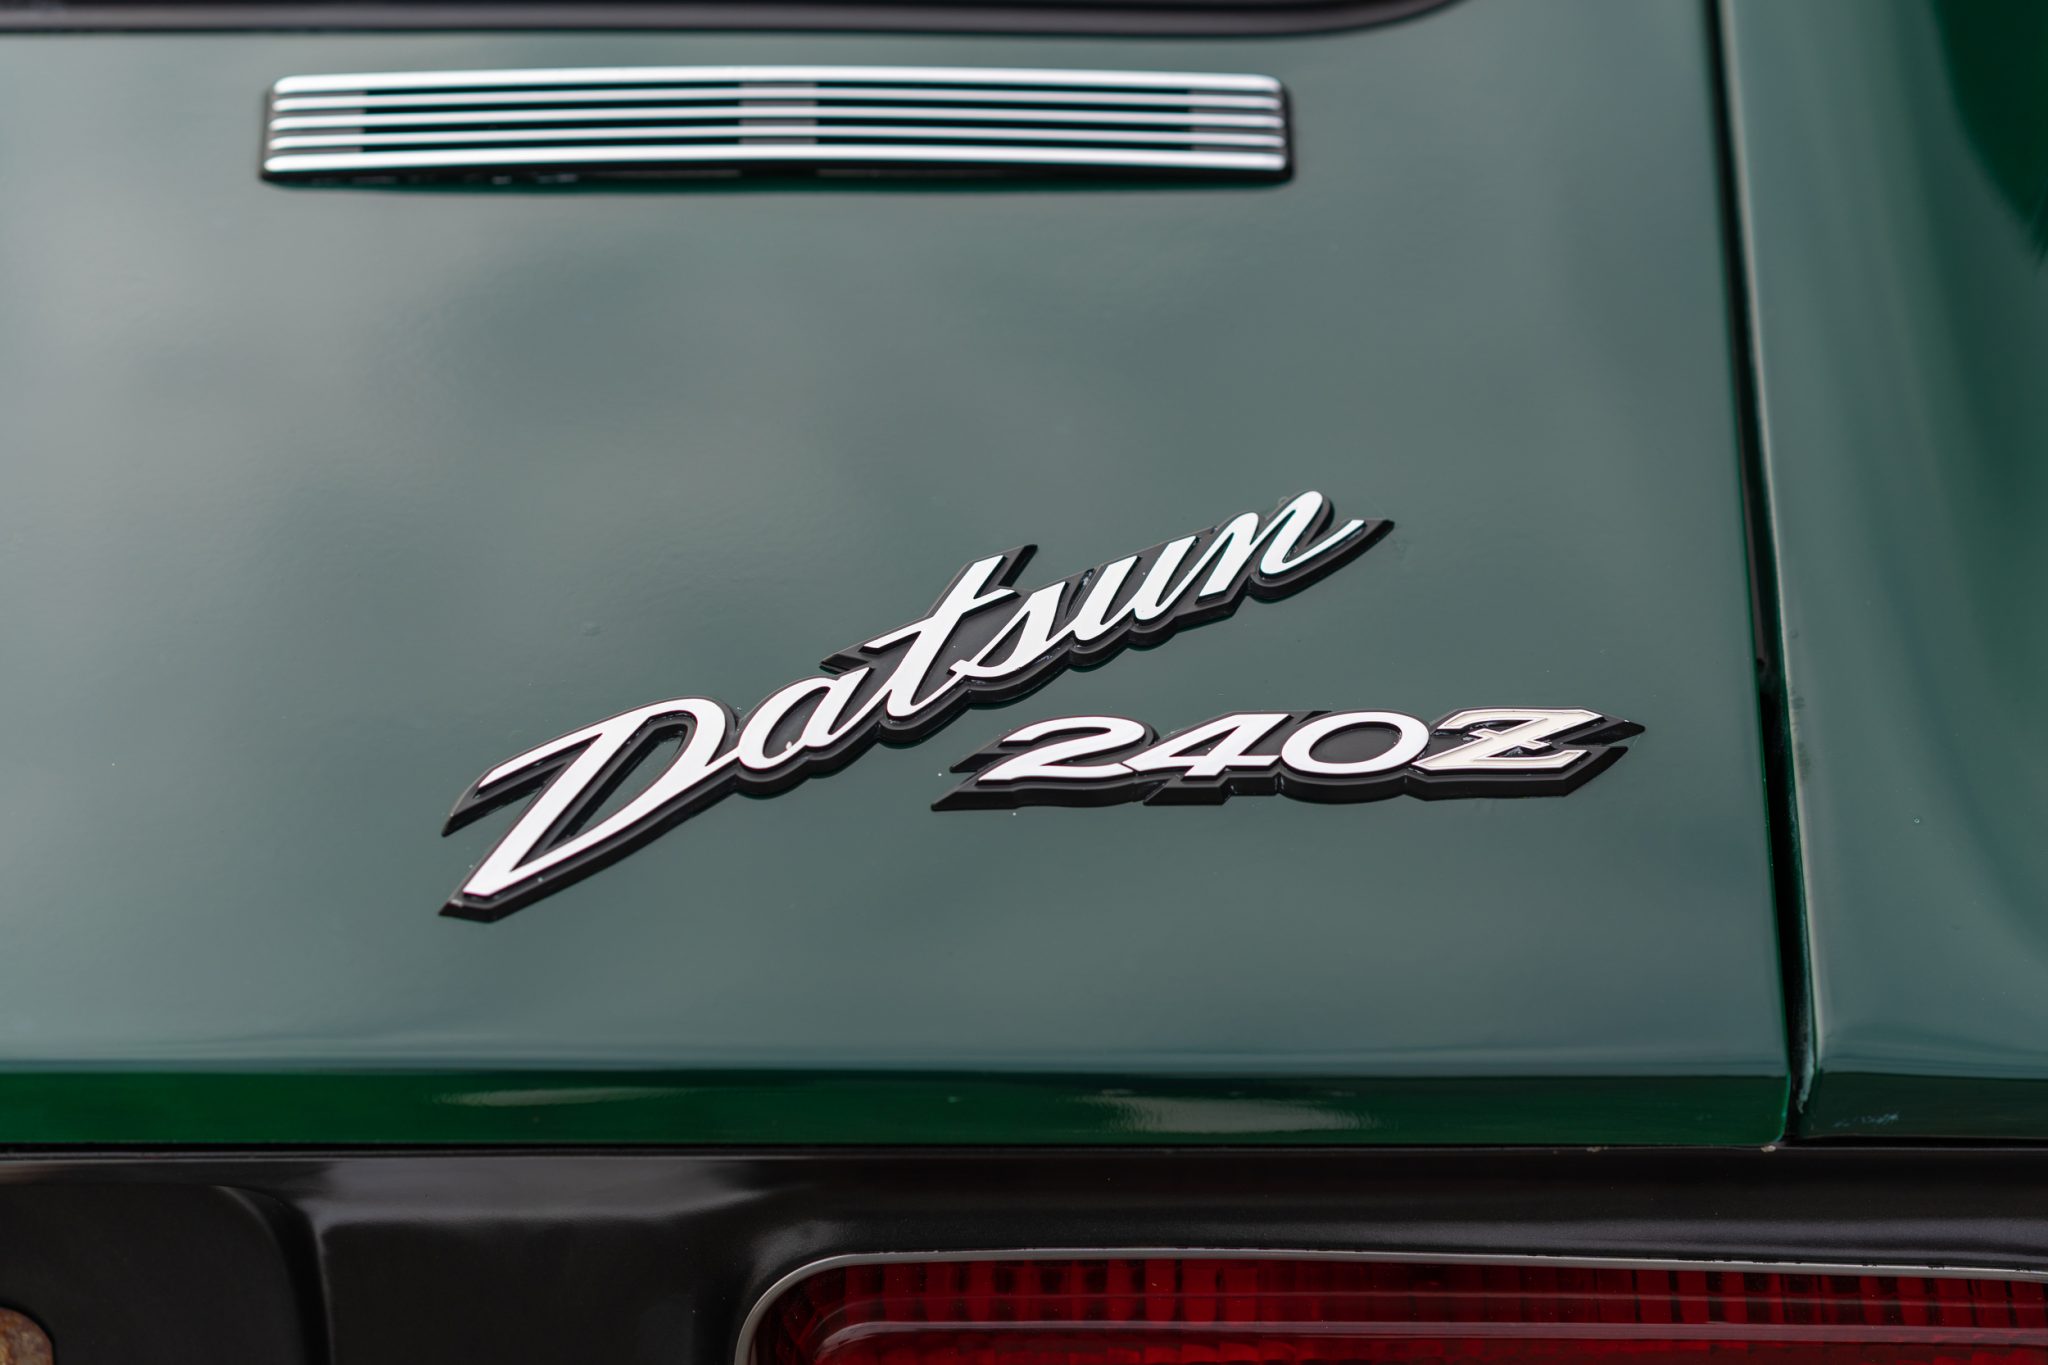 "Datsun" script badge on hatch